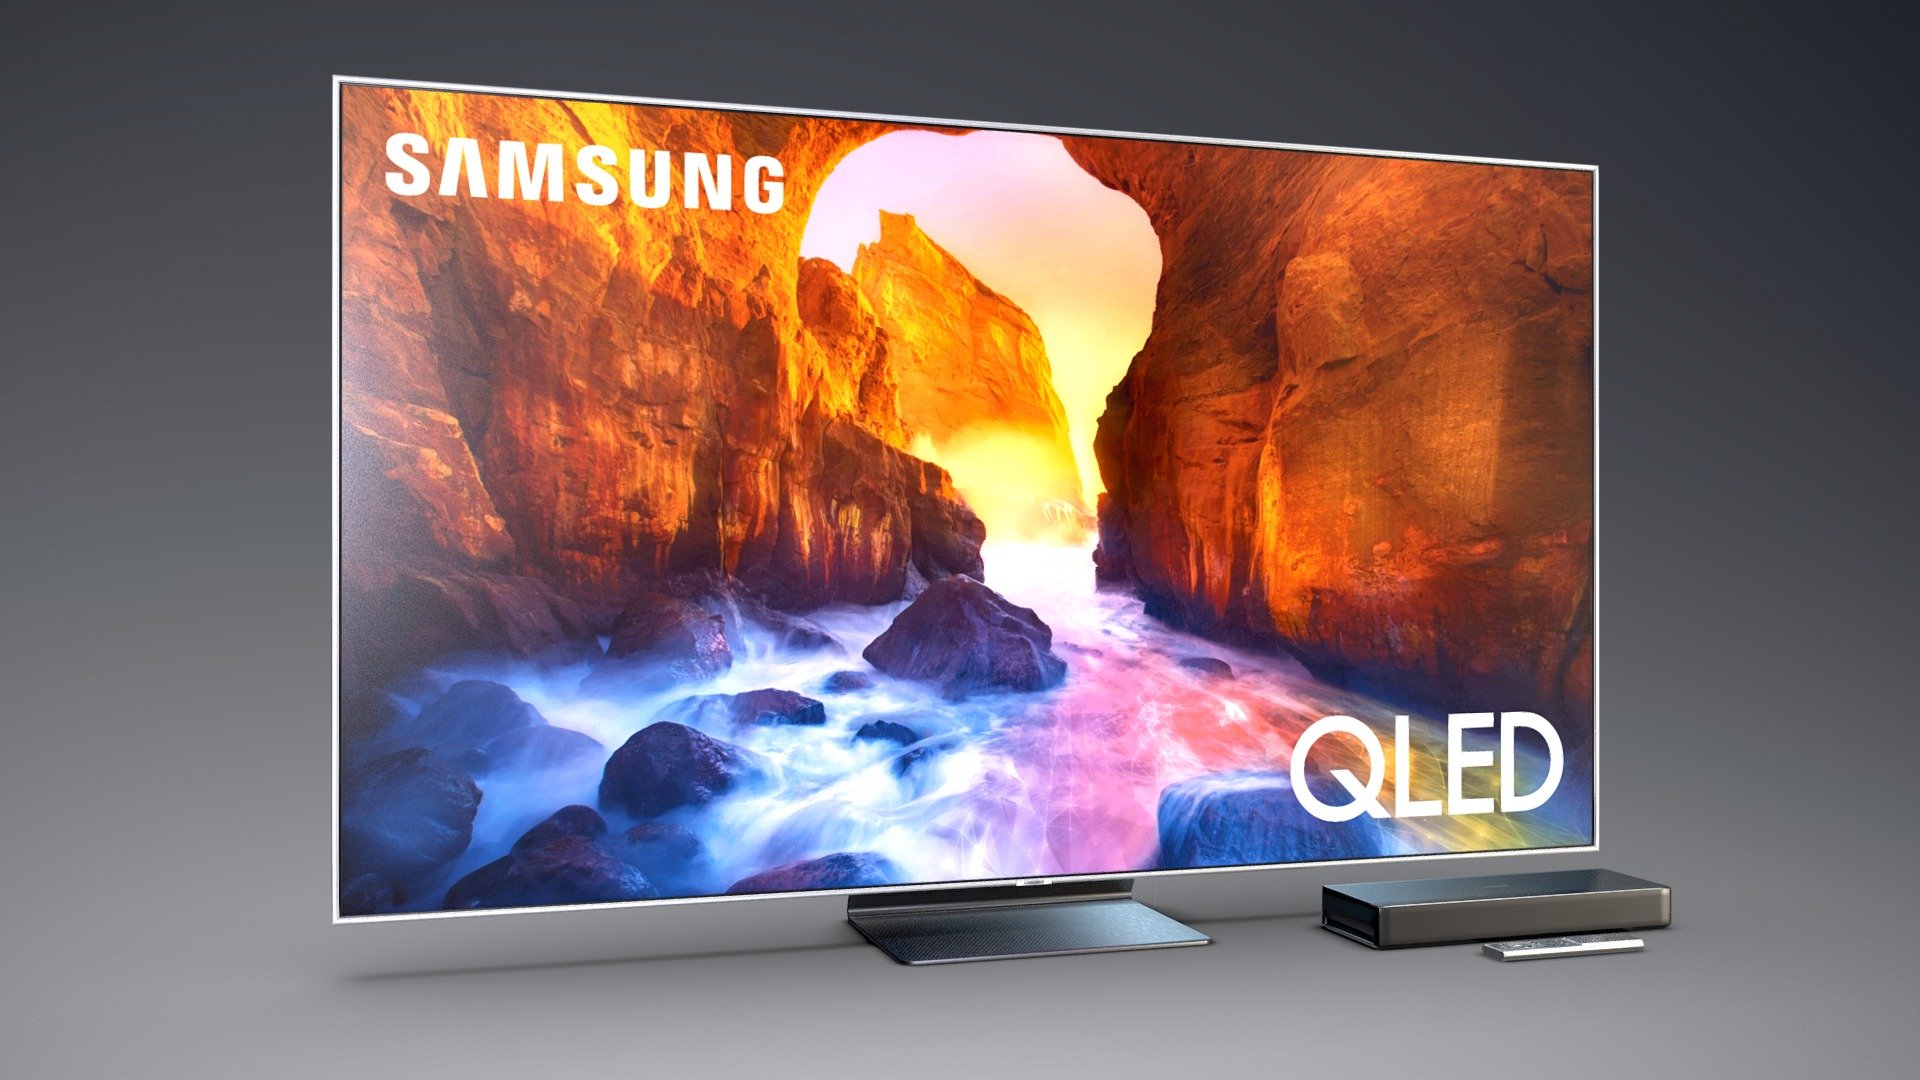 Samsung TV Q90 Set - Television, Remote, Box